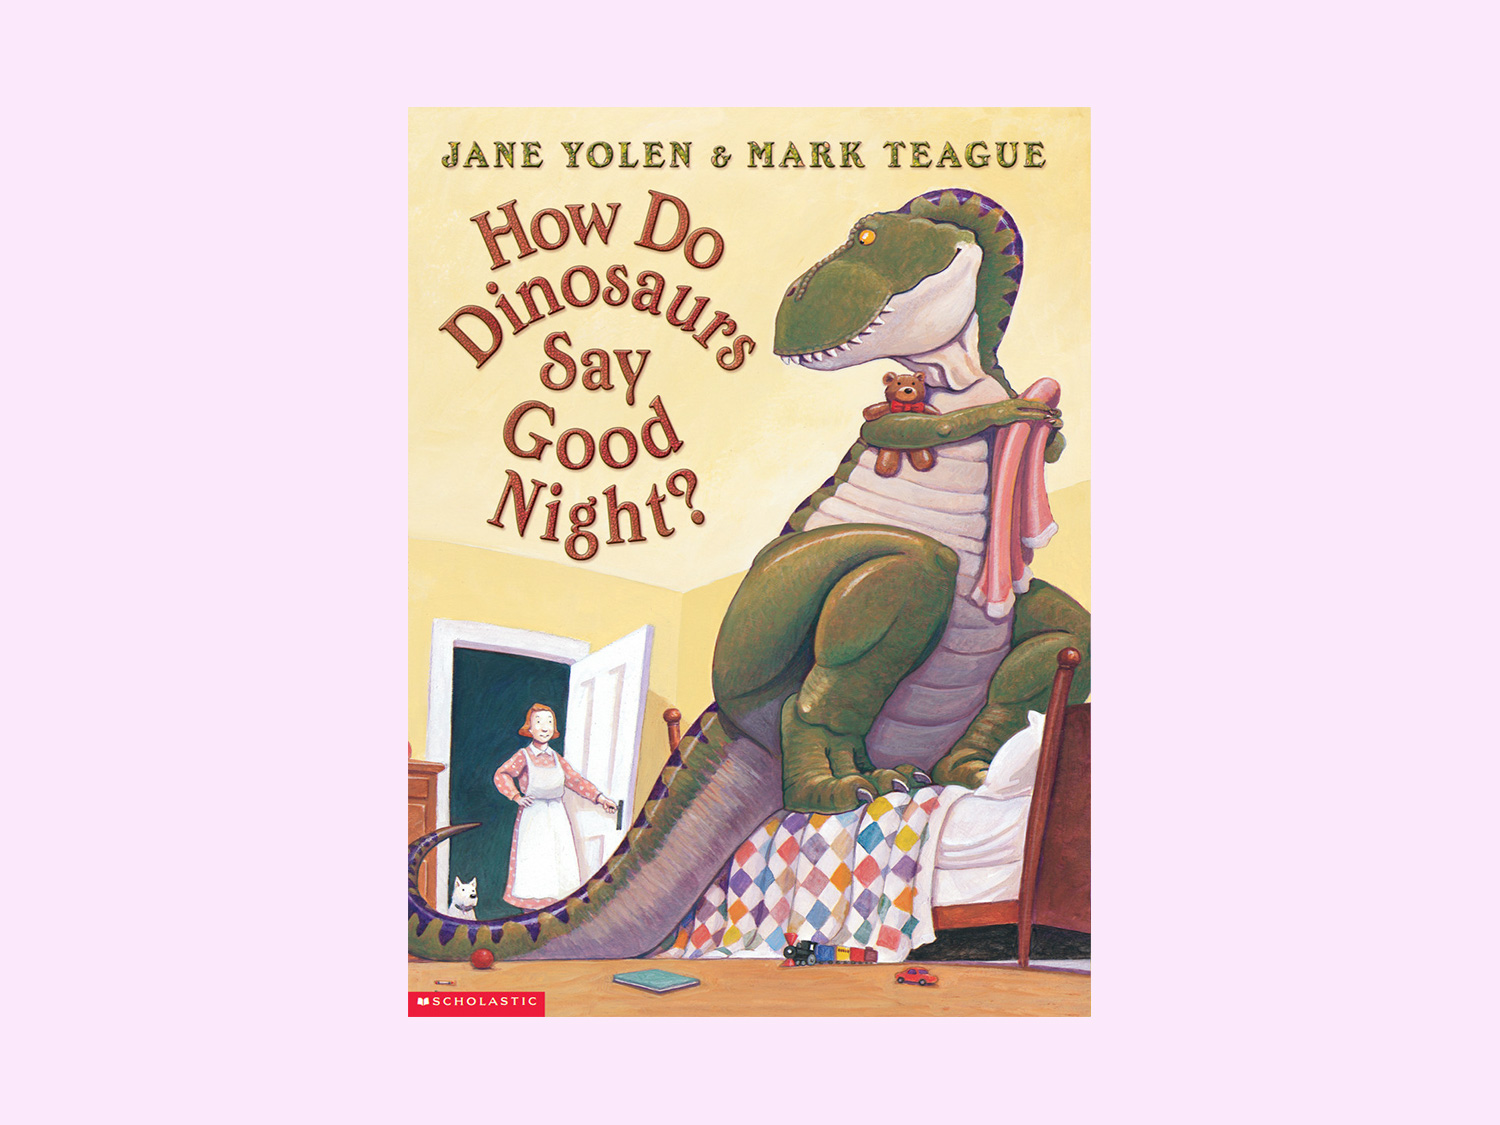 Reading Tips from “How Do Dinosaurs Say Goodnight?”